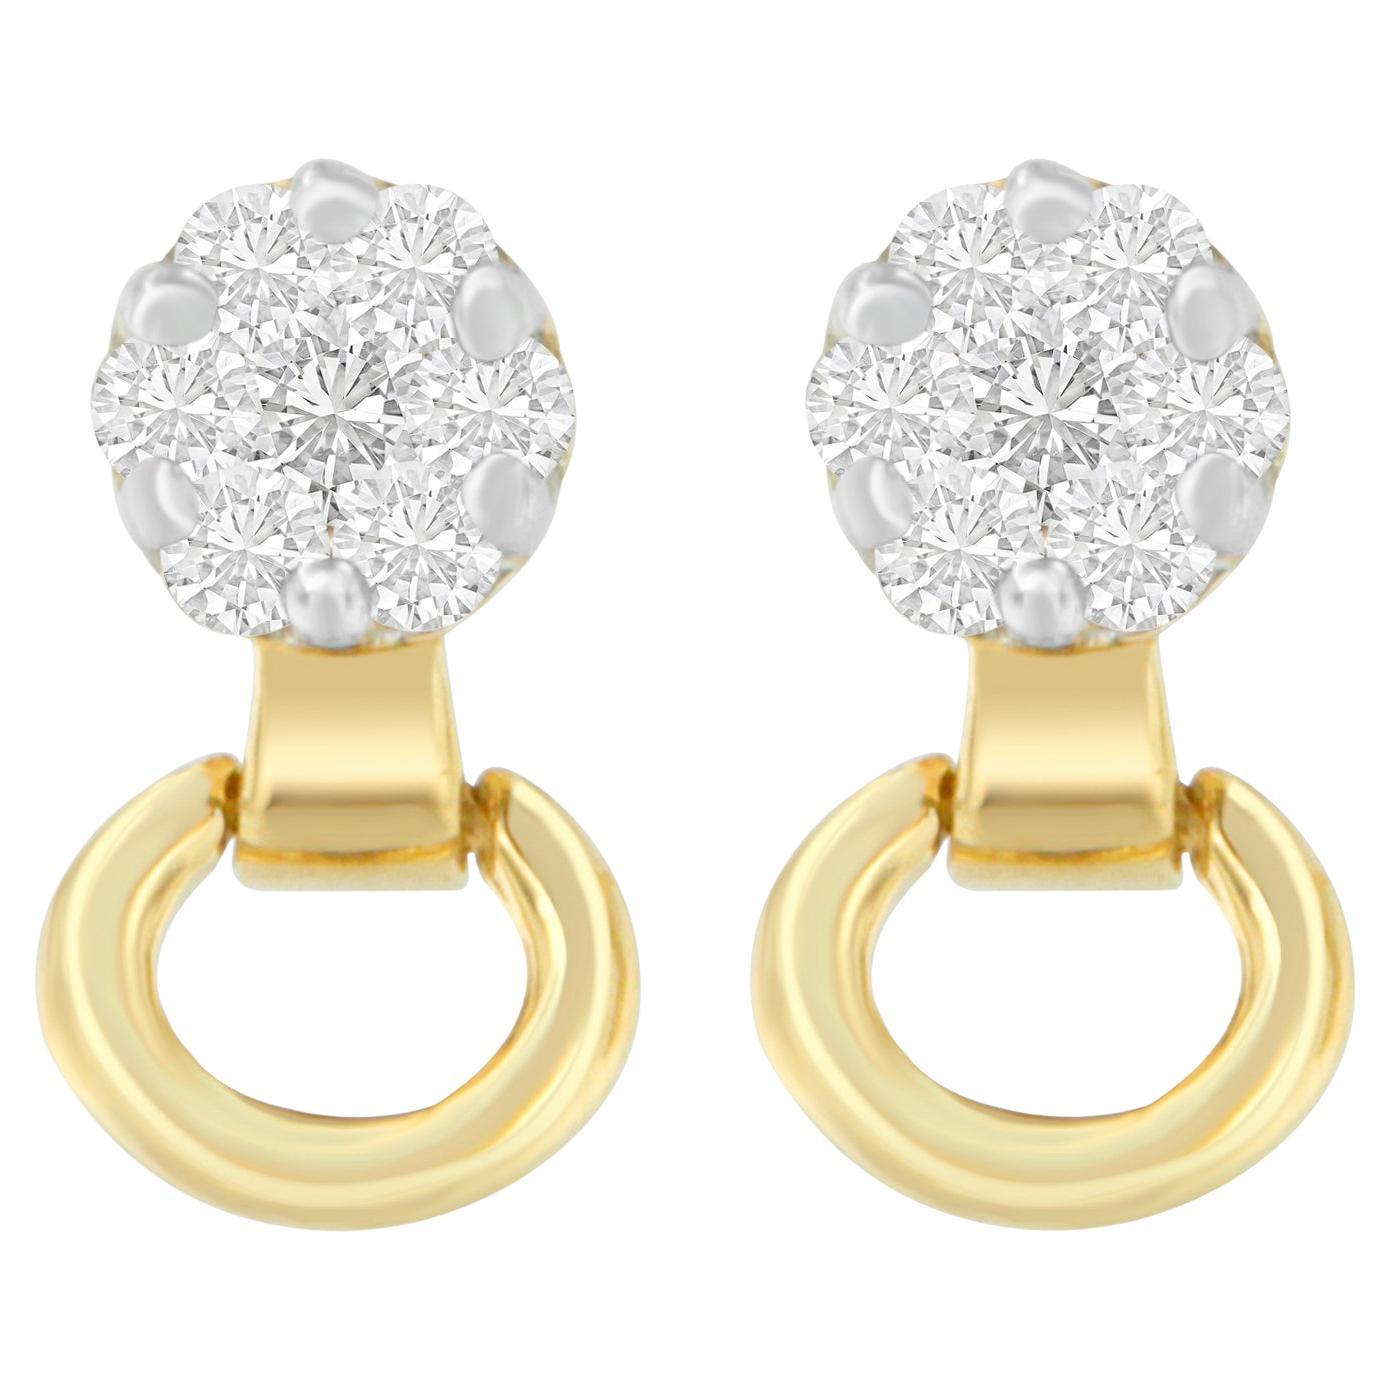 14K Yellow Gold 1/2 Carat Diamond Stud Earrings